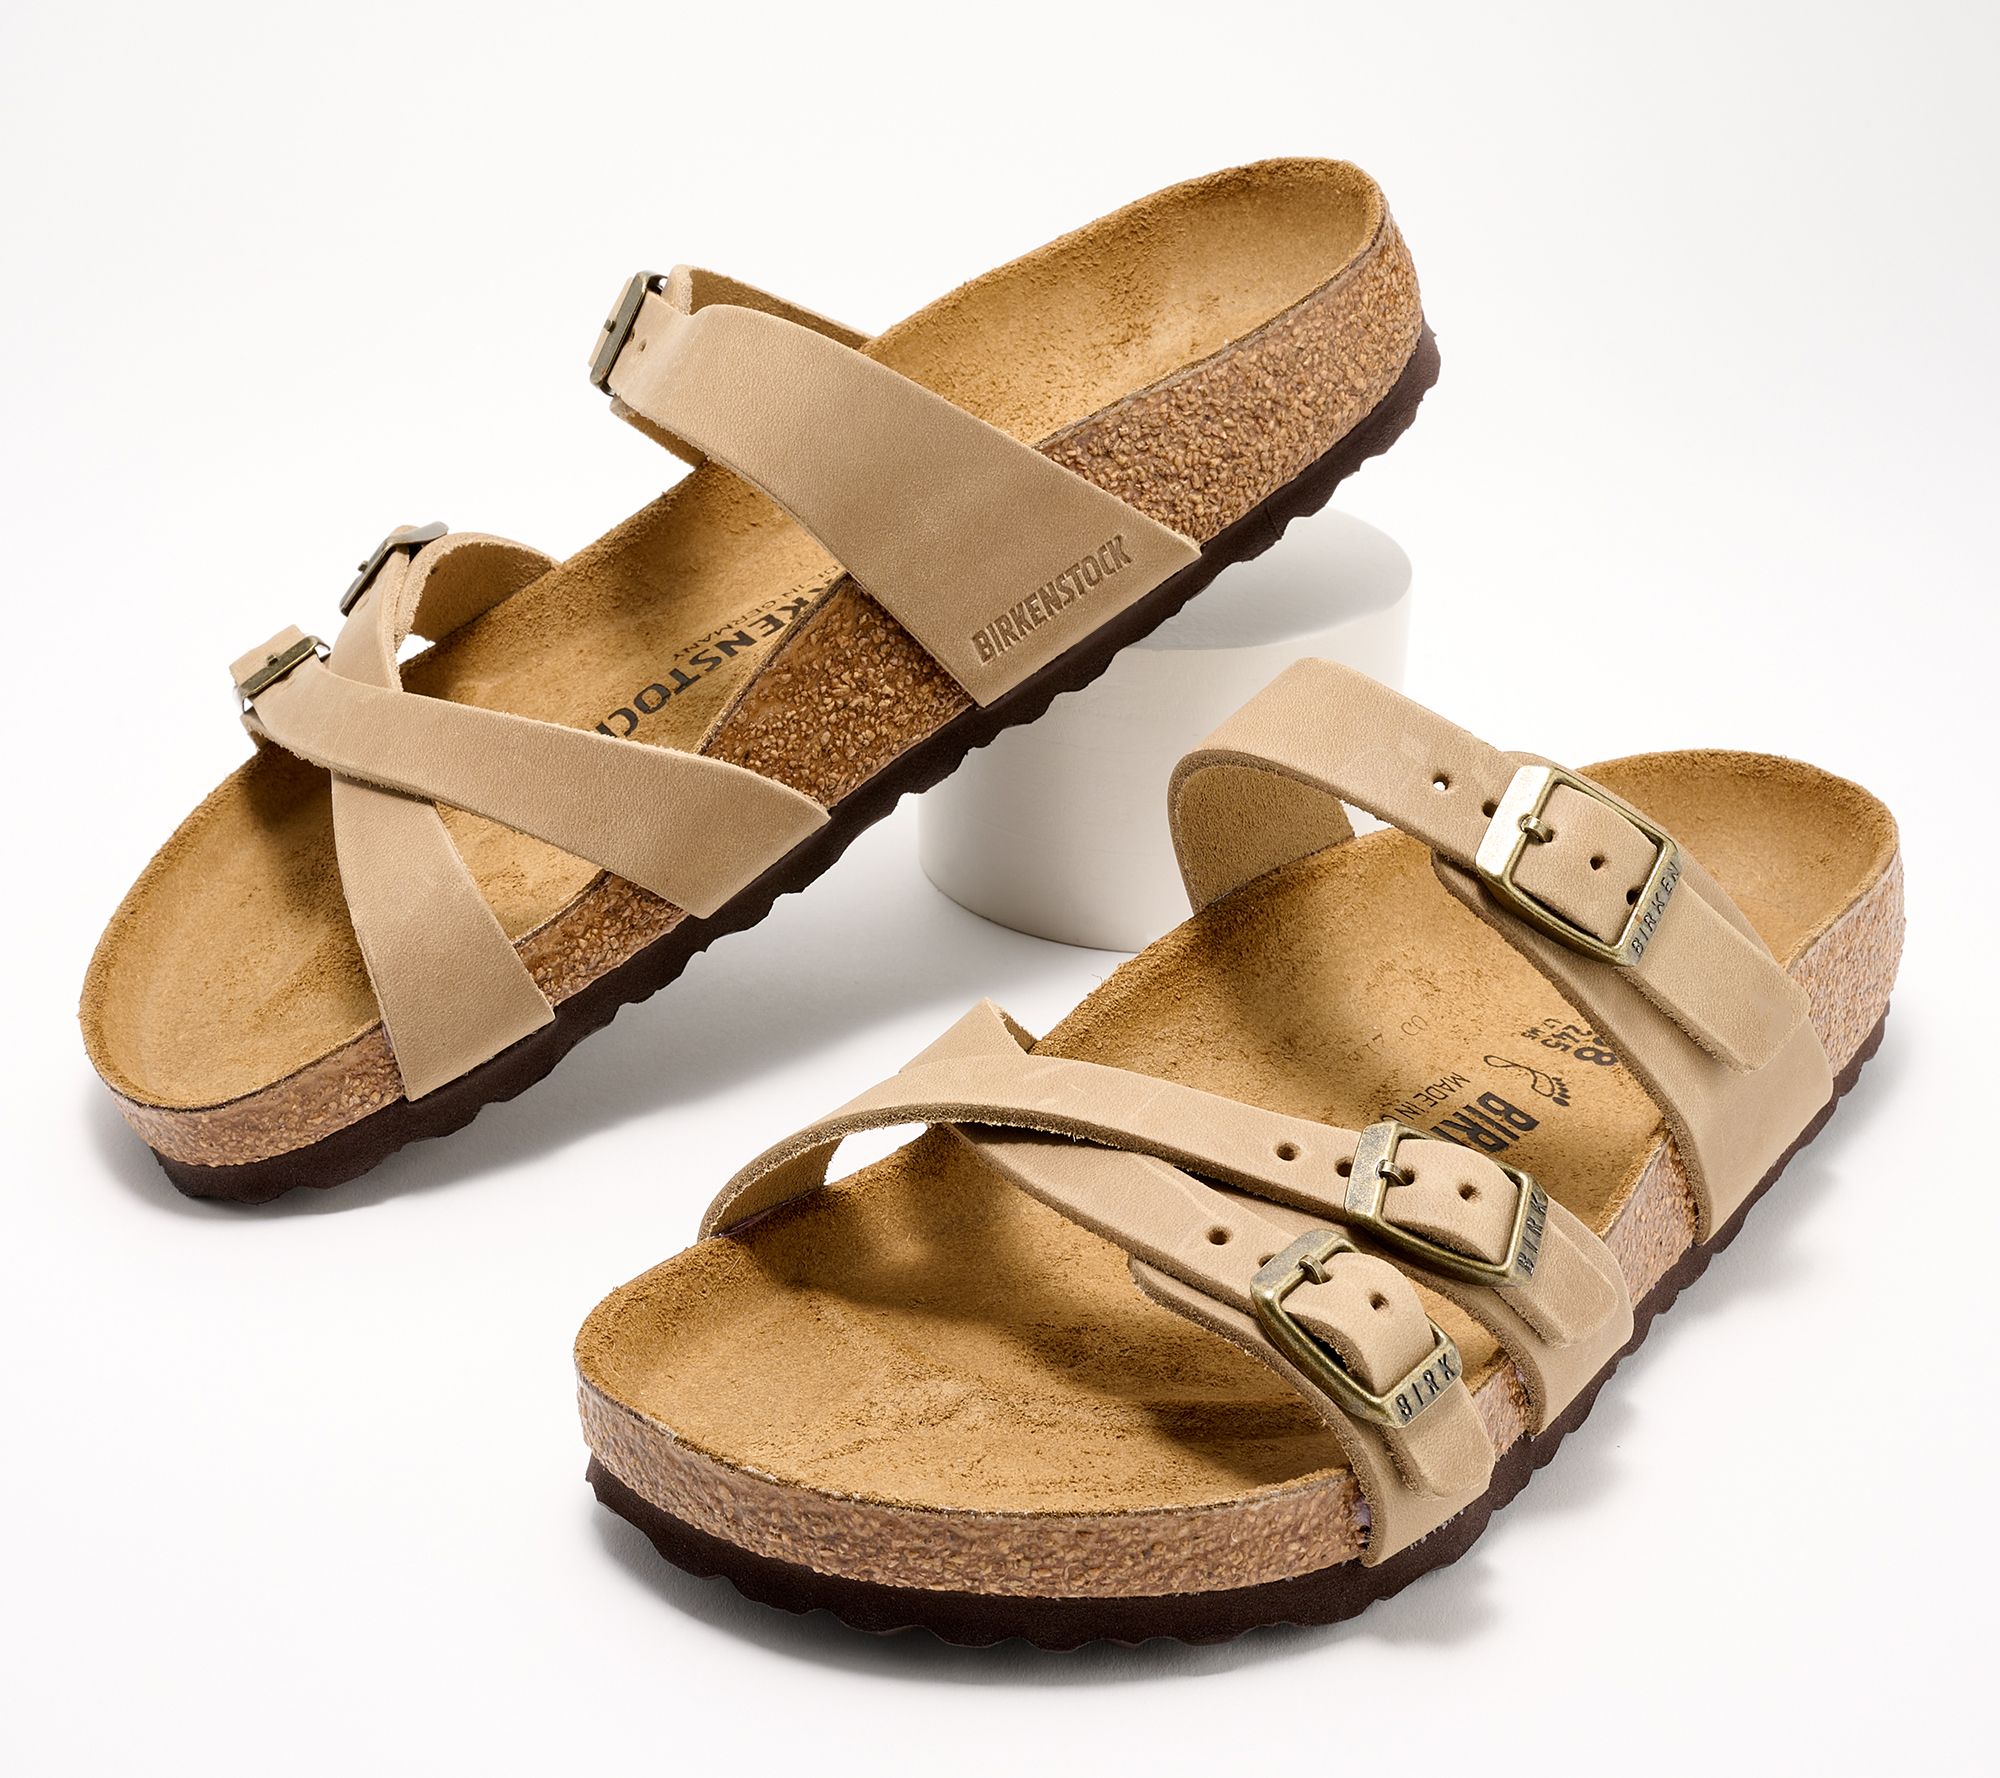 Birkenstock Franca White Leather Women's Sandals (Narrow